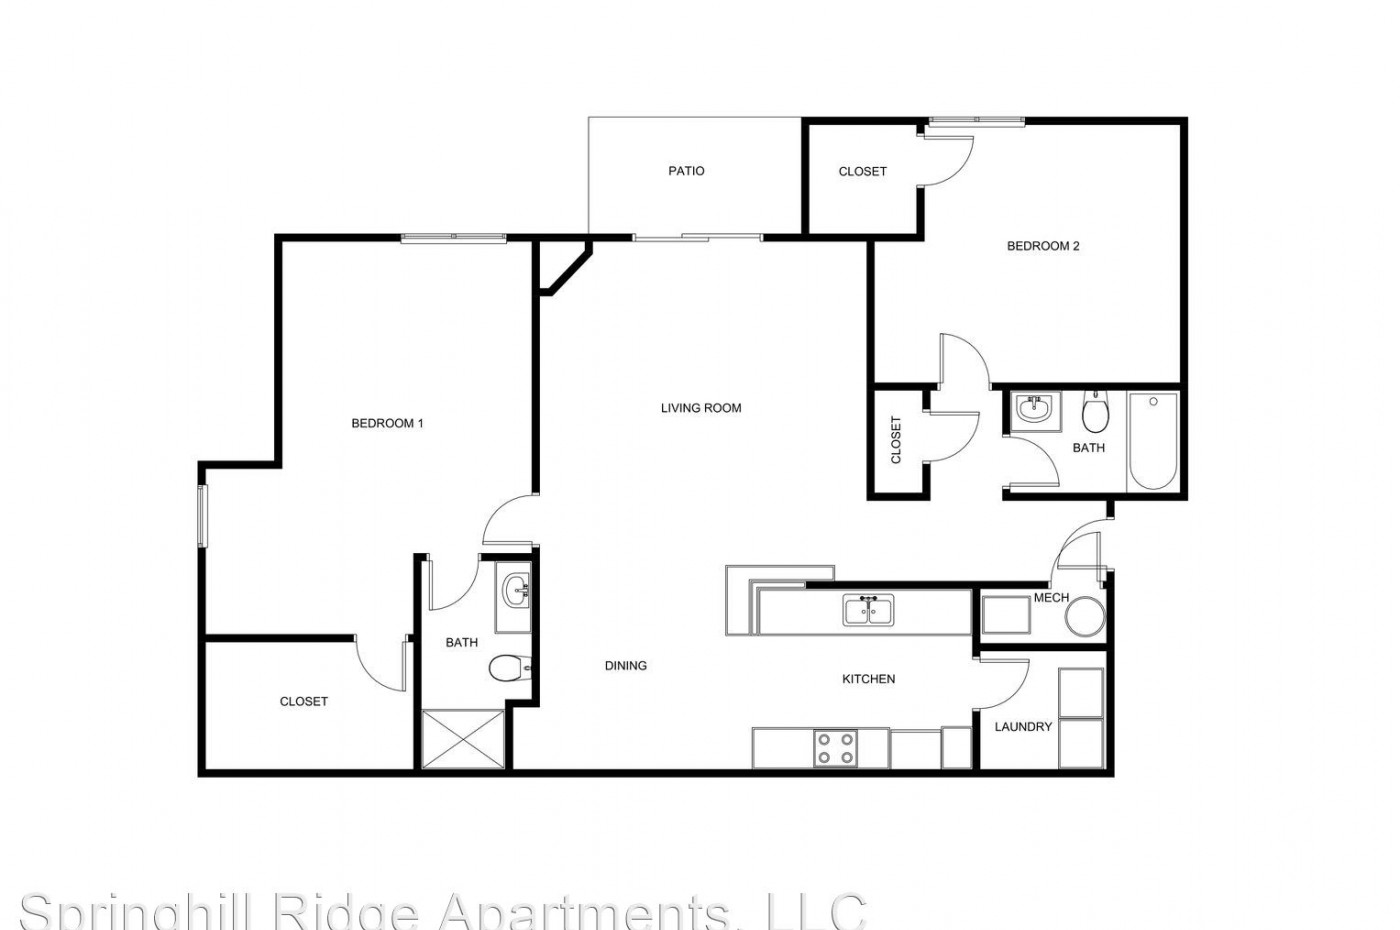 Springhill Ridge Apartments